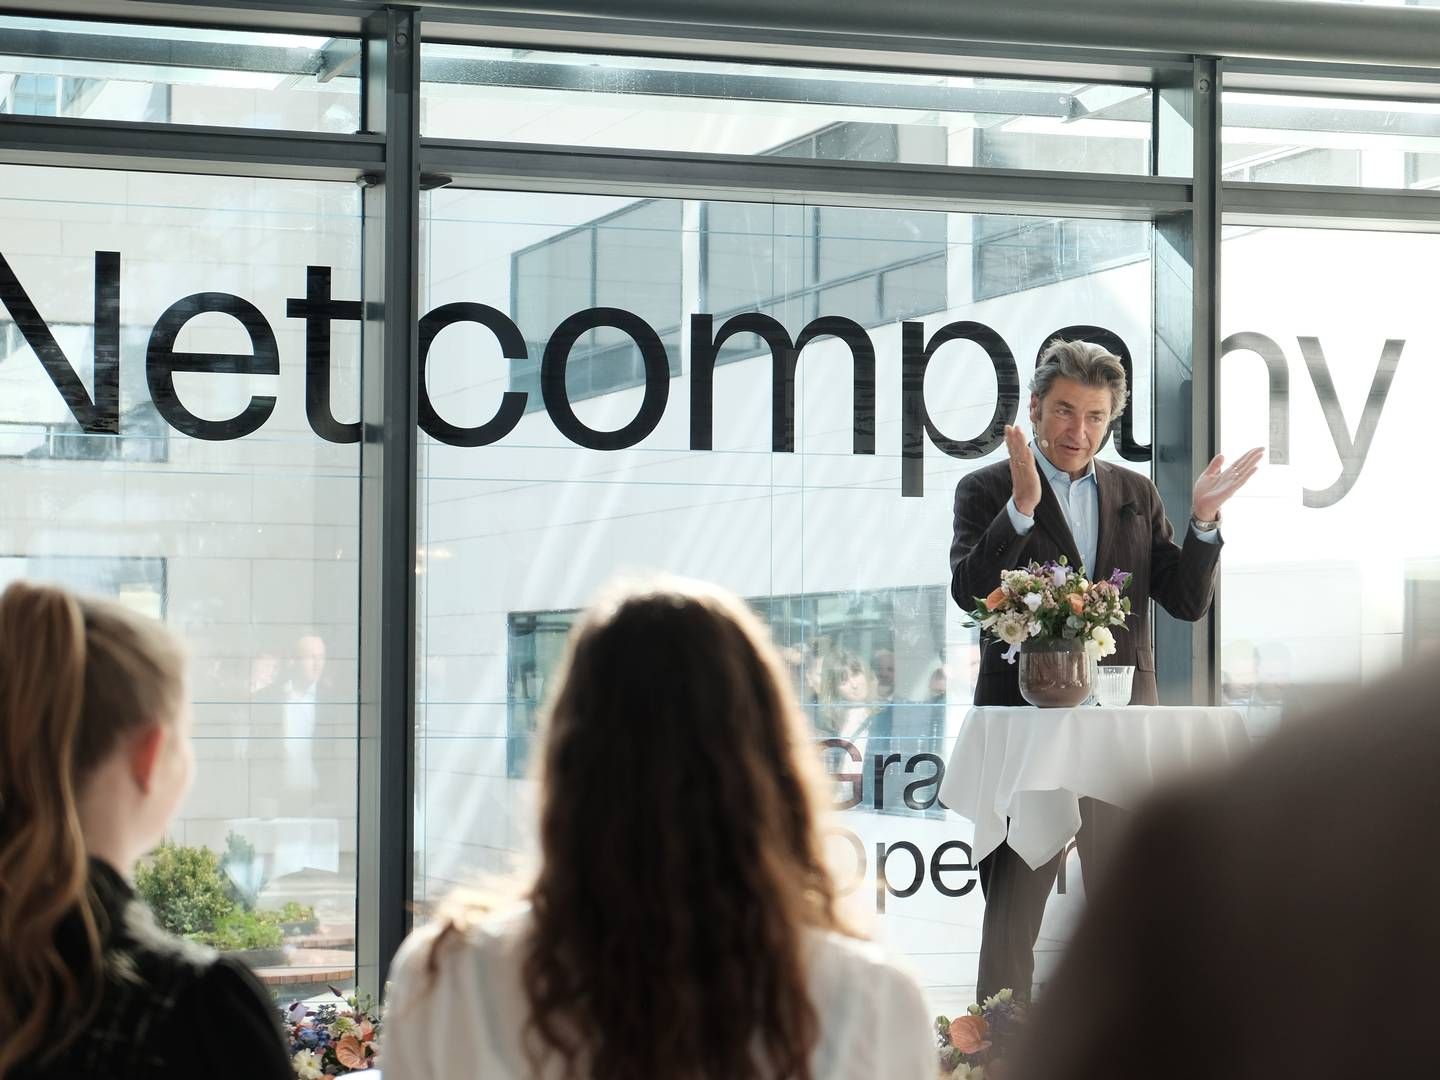 Netcompany, med direktør André Rogaczewski i spidsen, skriver tirsdag i en fondsbørsmeddelelse, at lækage-situationen ikke har betydning for driften hos hverken Netcompany eller firmaets kunder. | Foto: Thomas Bruun Funch